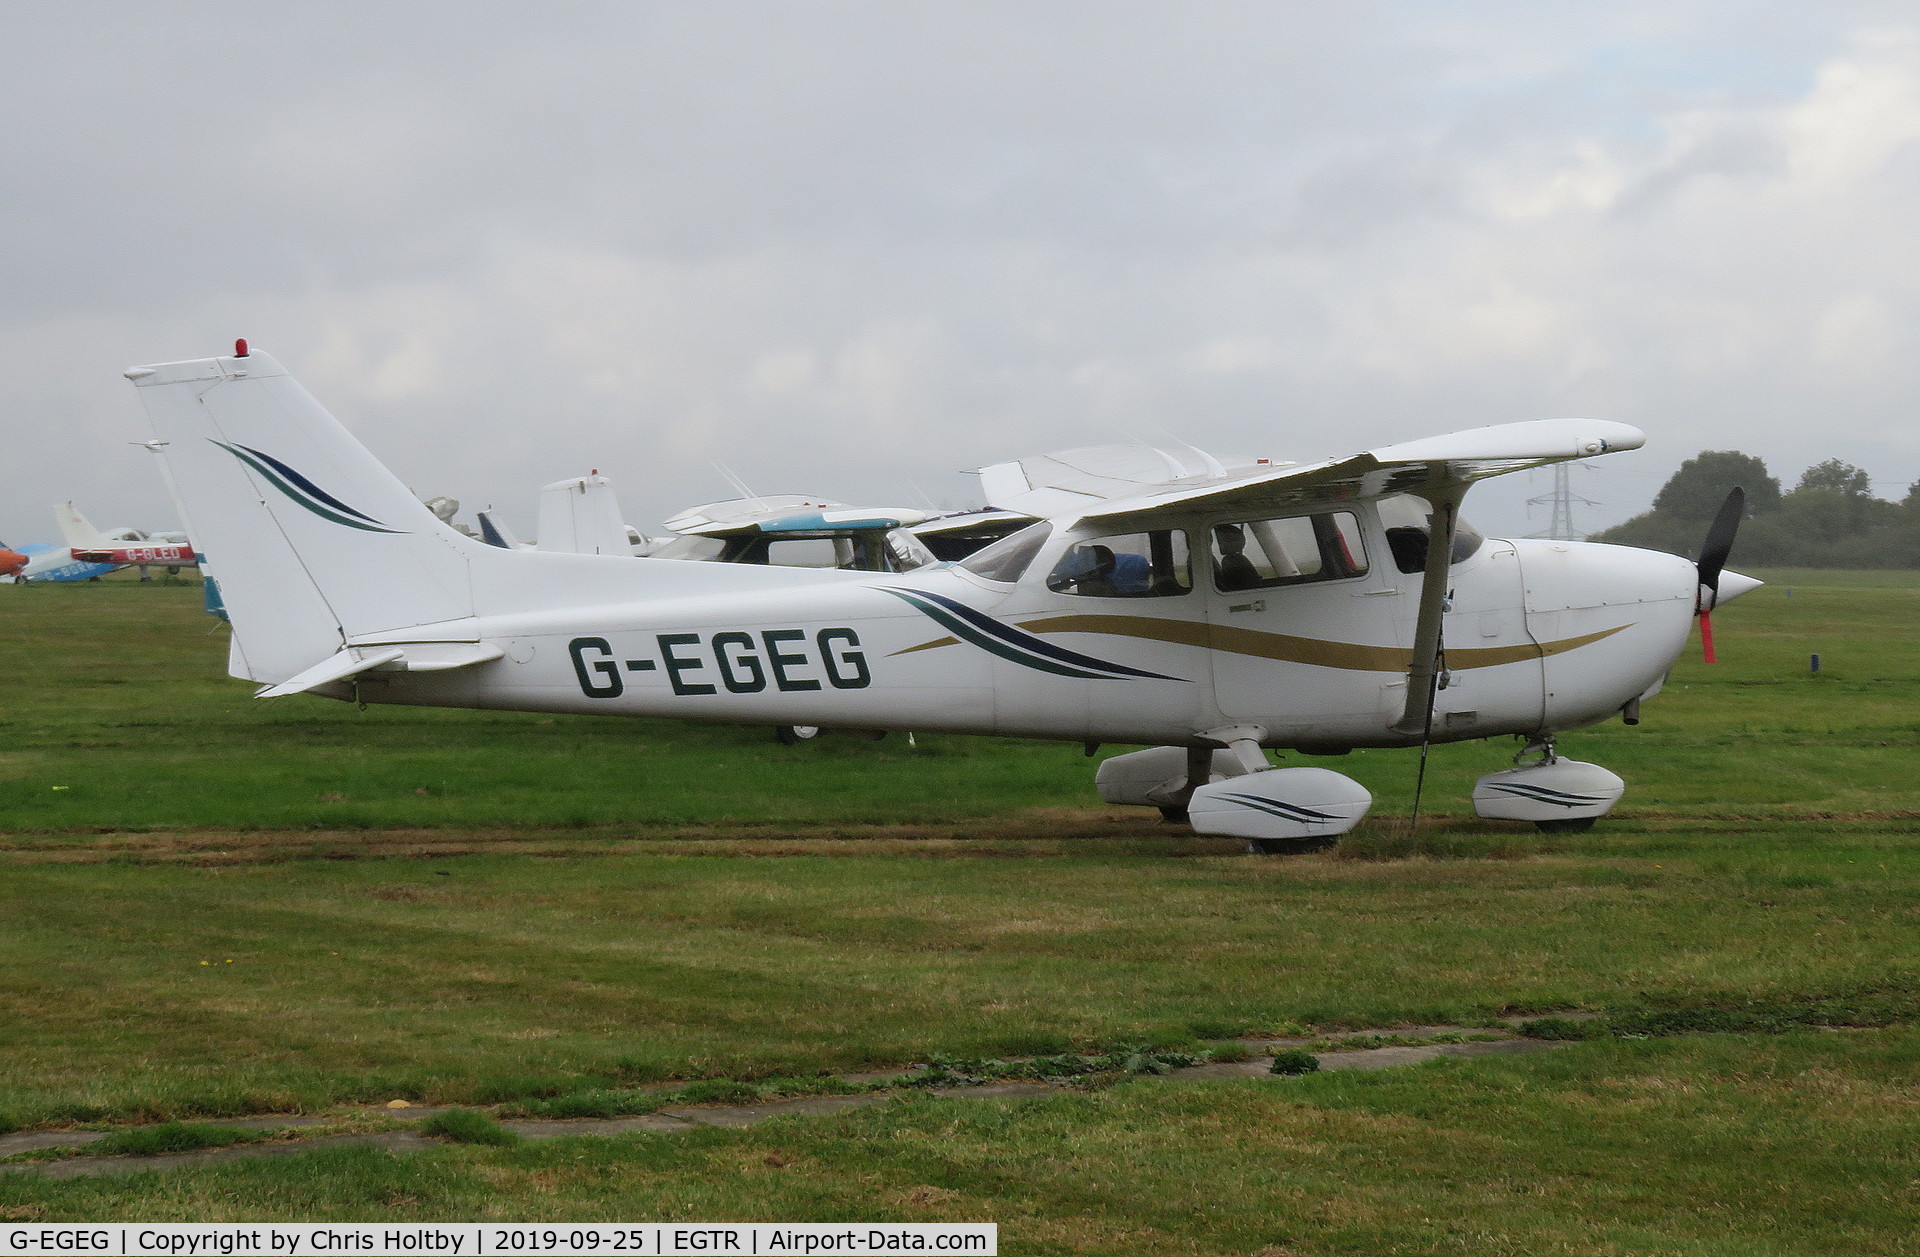 G-EGEG, 2000 Cessna 172R C/N 17280894, Parked at its base Elstree